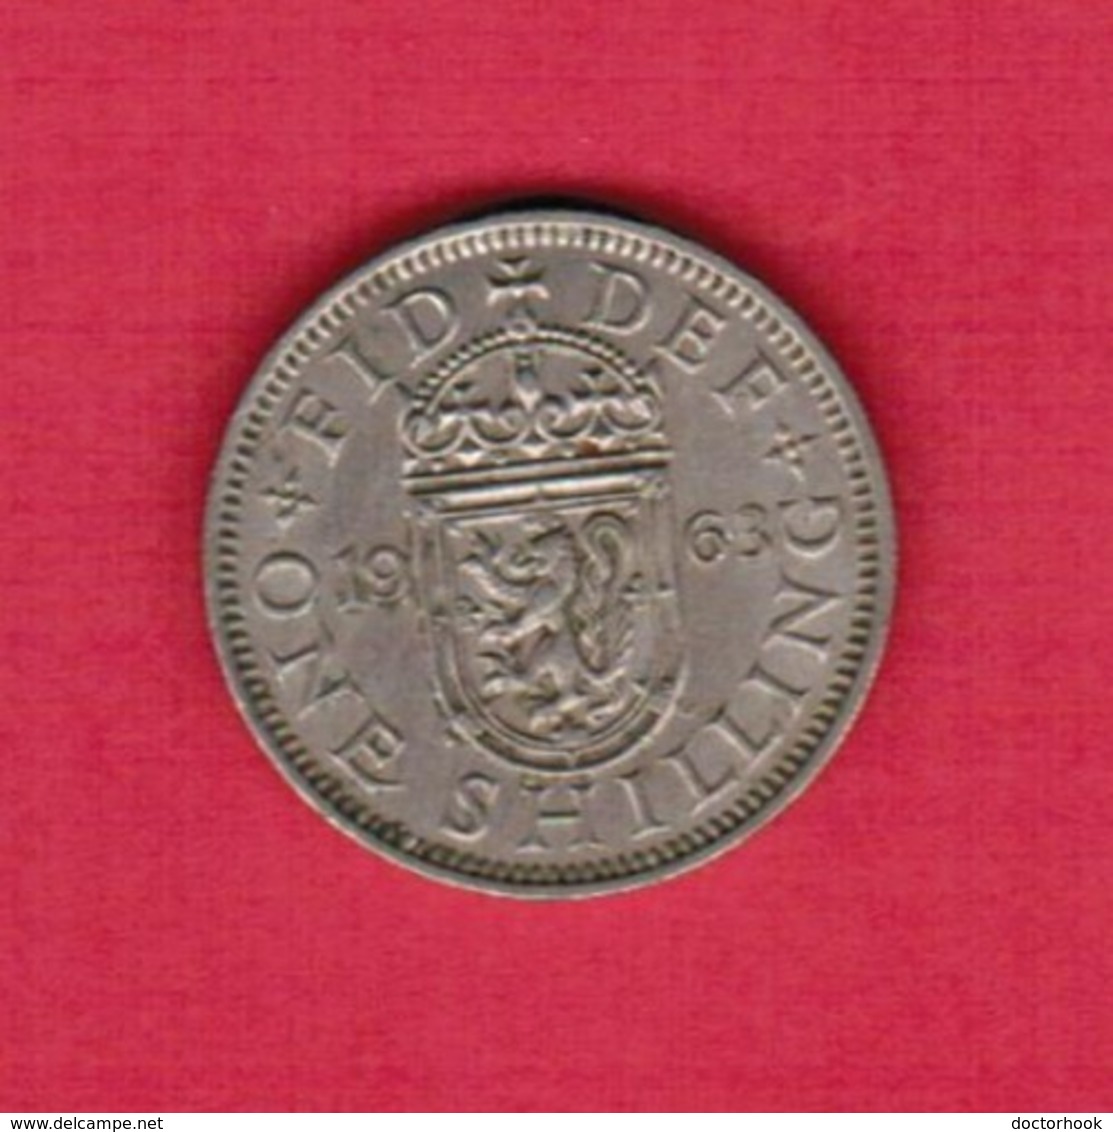 GREAT BRITAIN   1 SHILLING 1963  (KM # 904) #5182 - I. 1 Shilling